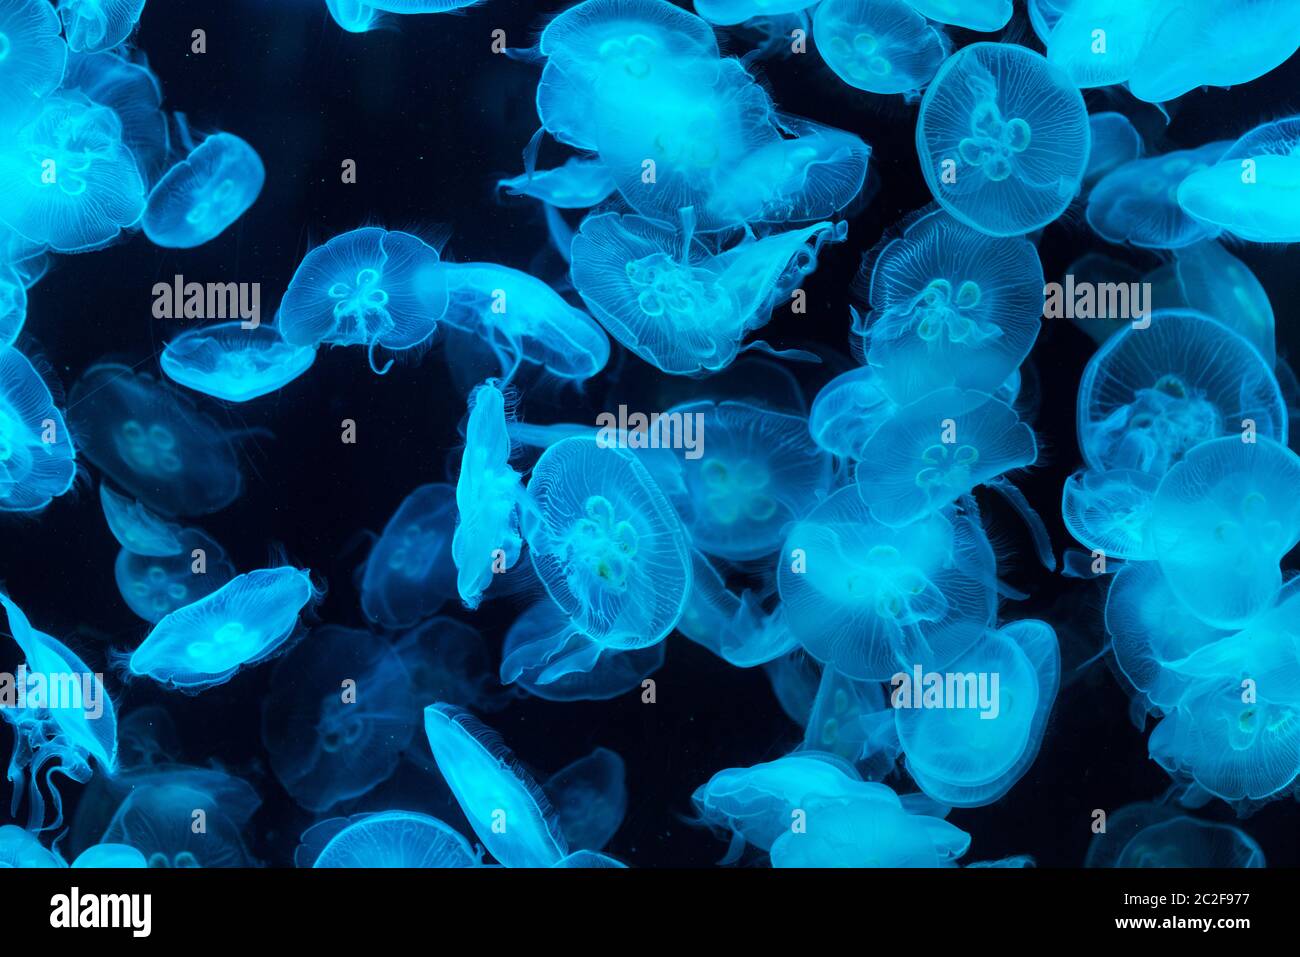 Common jellyfish in aquarium lit by blue light Stock Photo